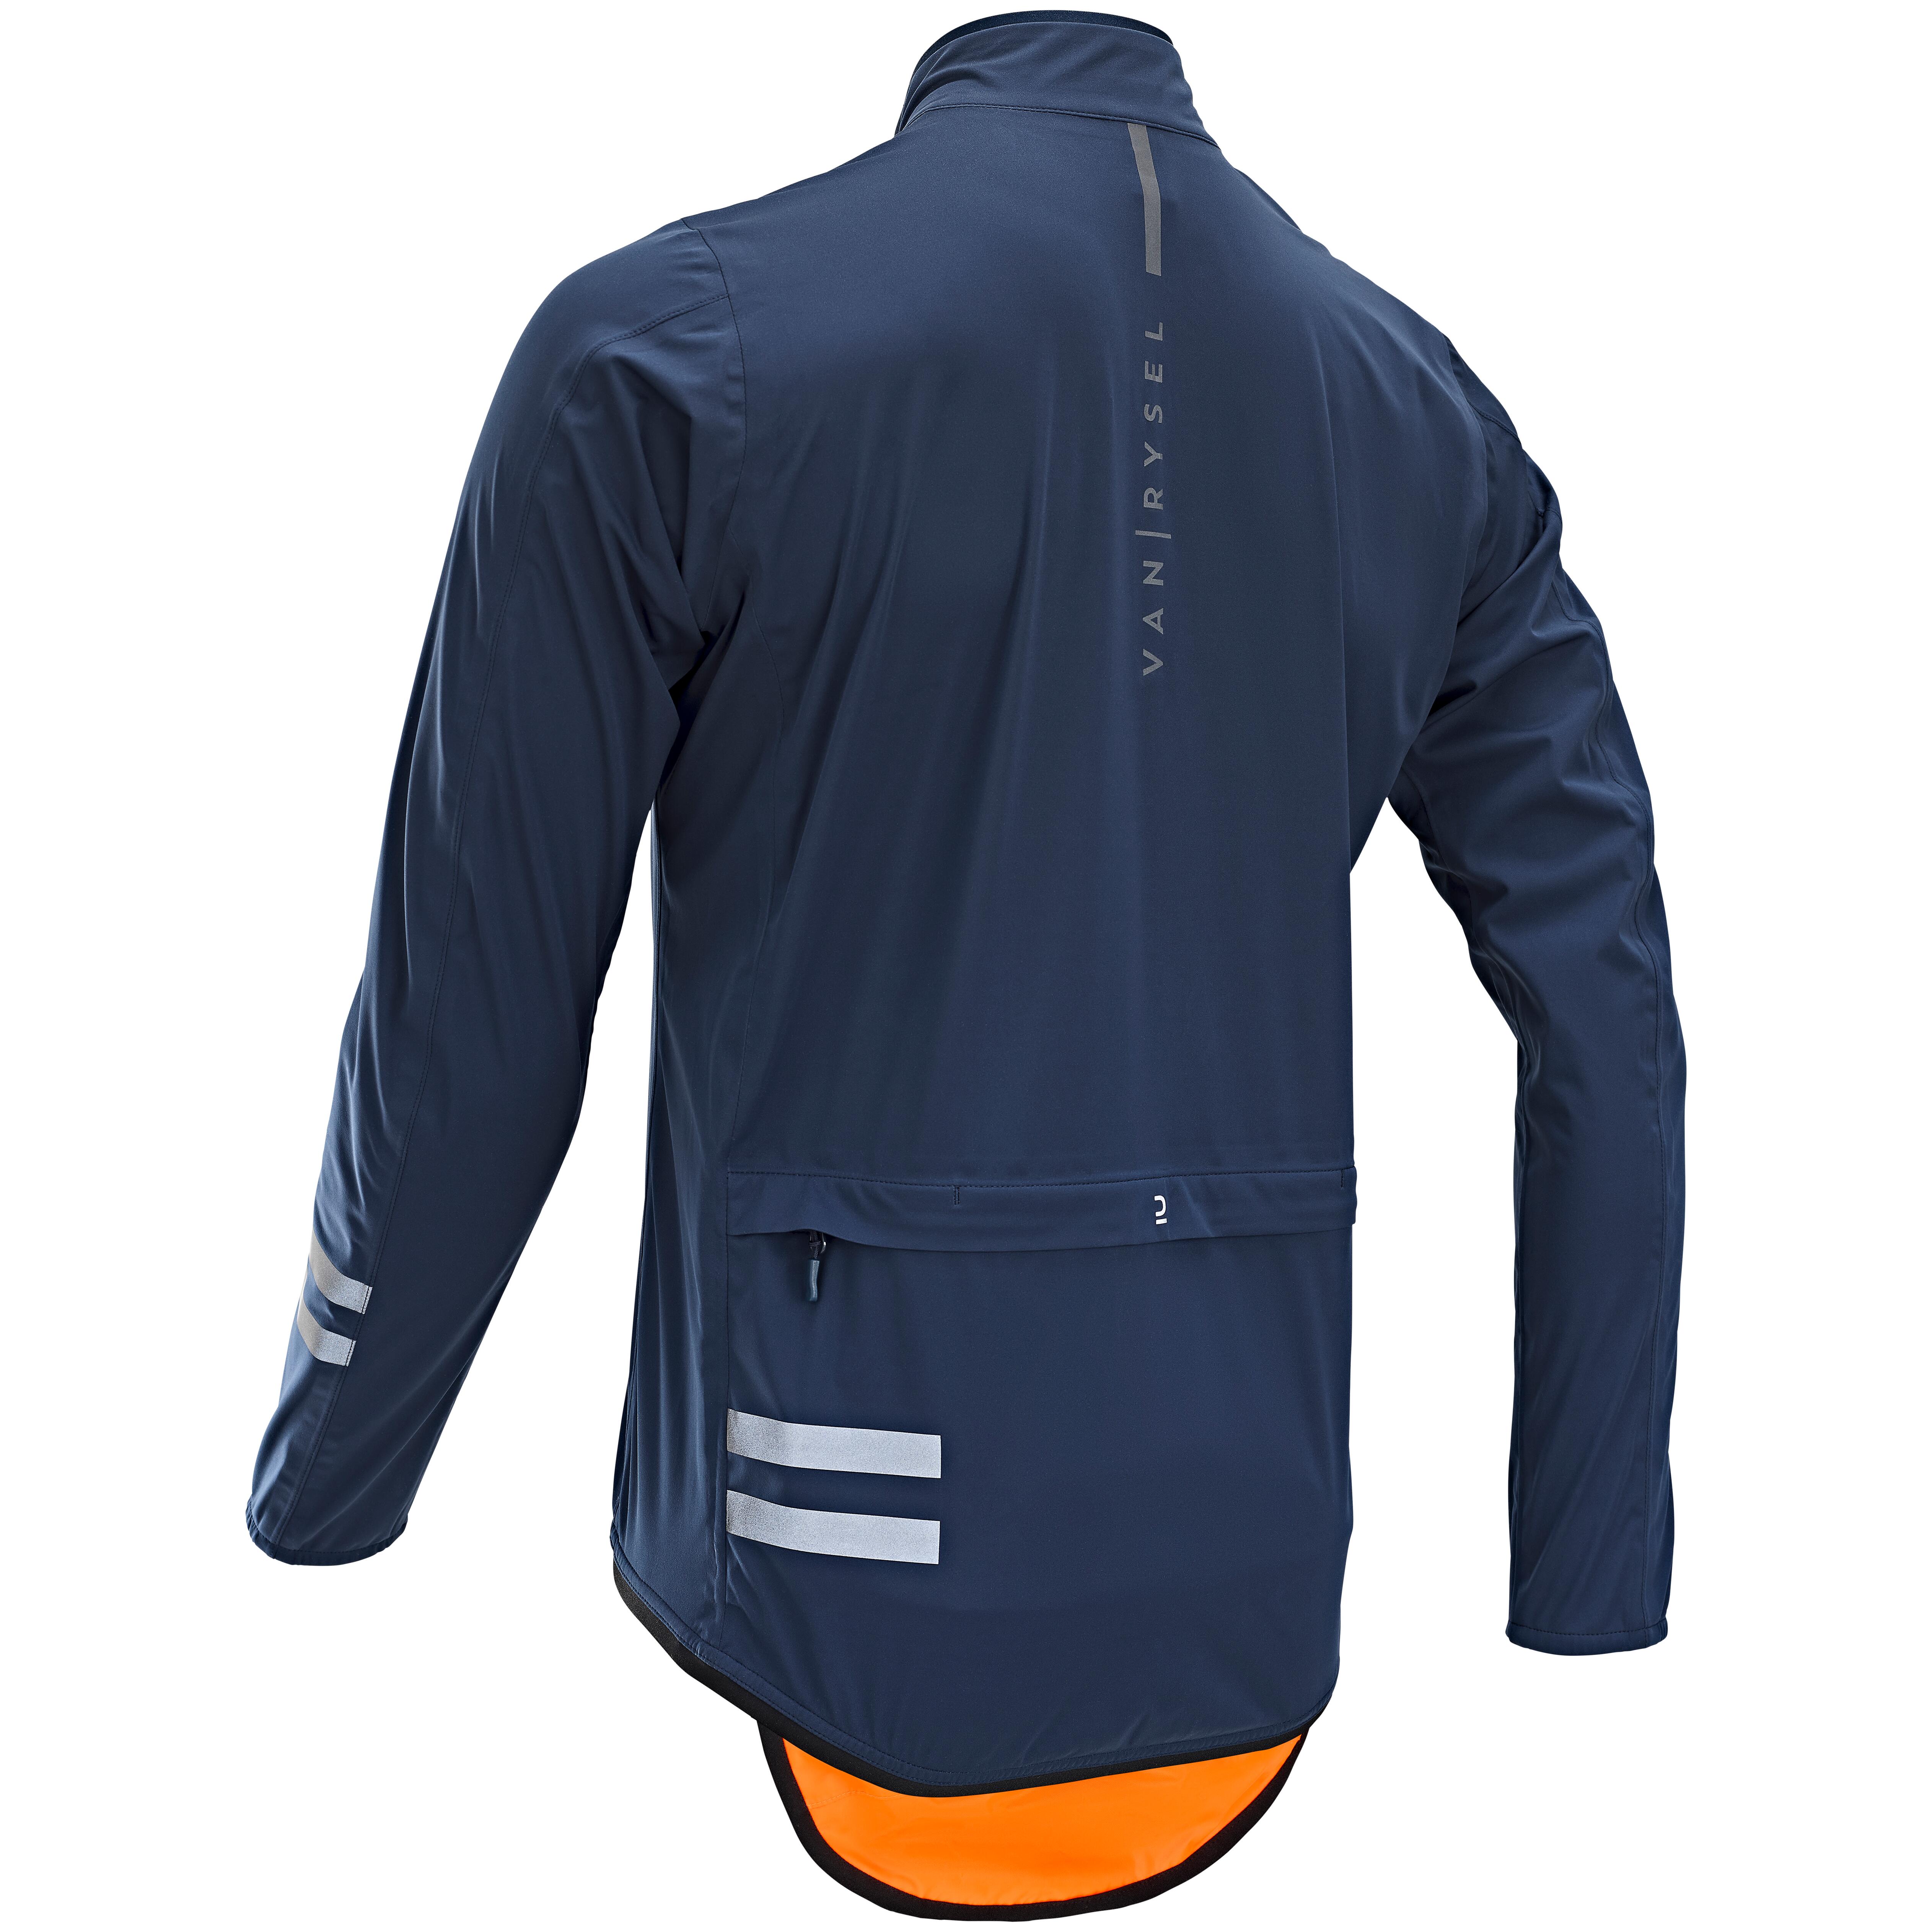 Men's Rainproof Road Cycling Jacket - RC 500 Blue